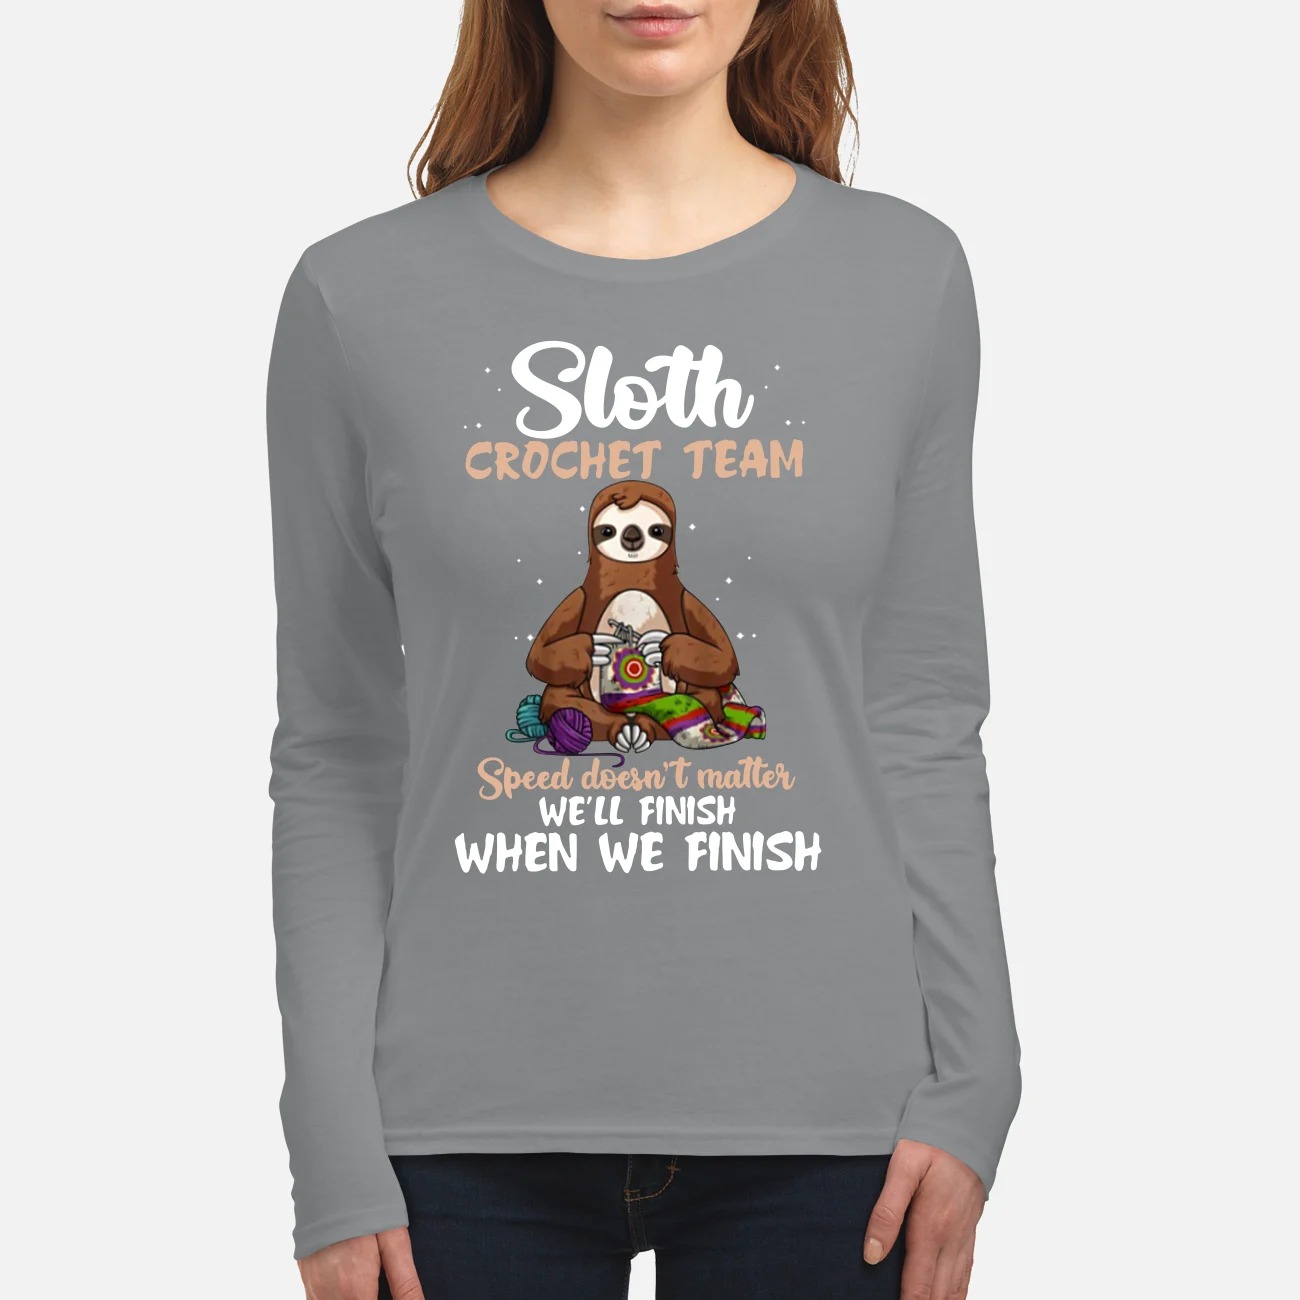 Sloth crochet team speed doesn't matter we'll finish when we finish women's long sleeved shirt